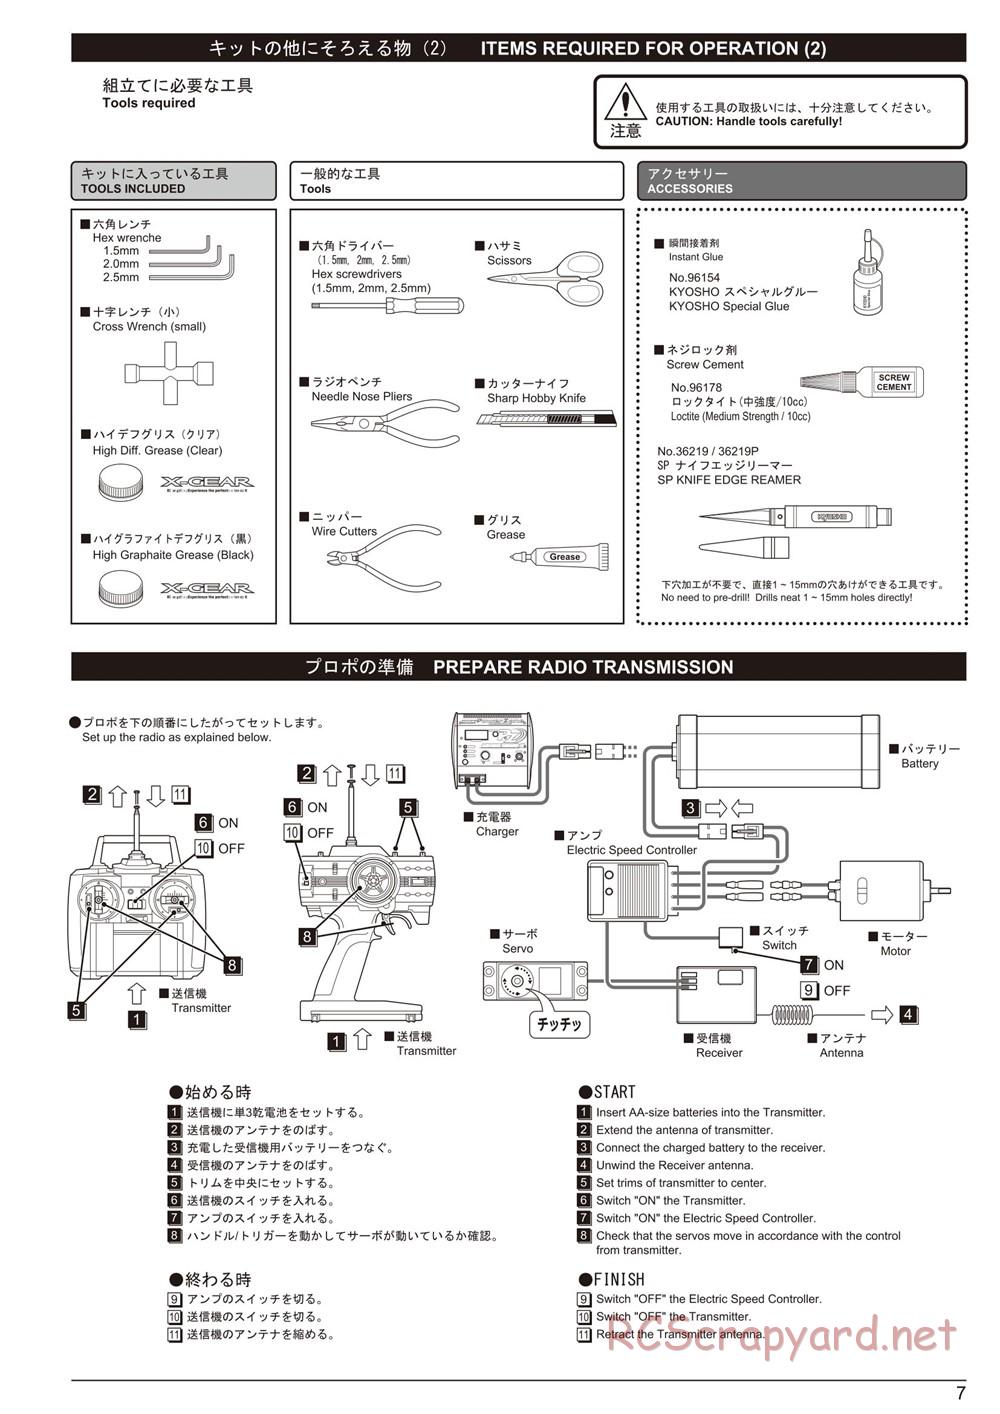 Kyosho - Lazer ZX-6 - Manual - Page 7